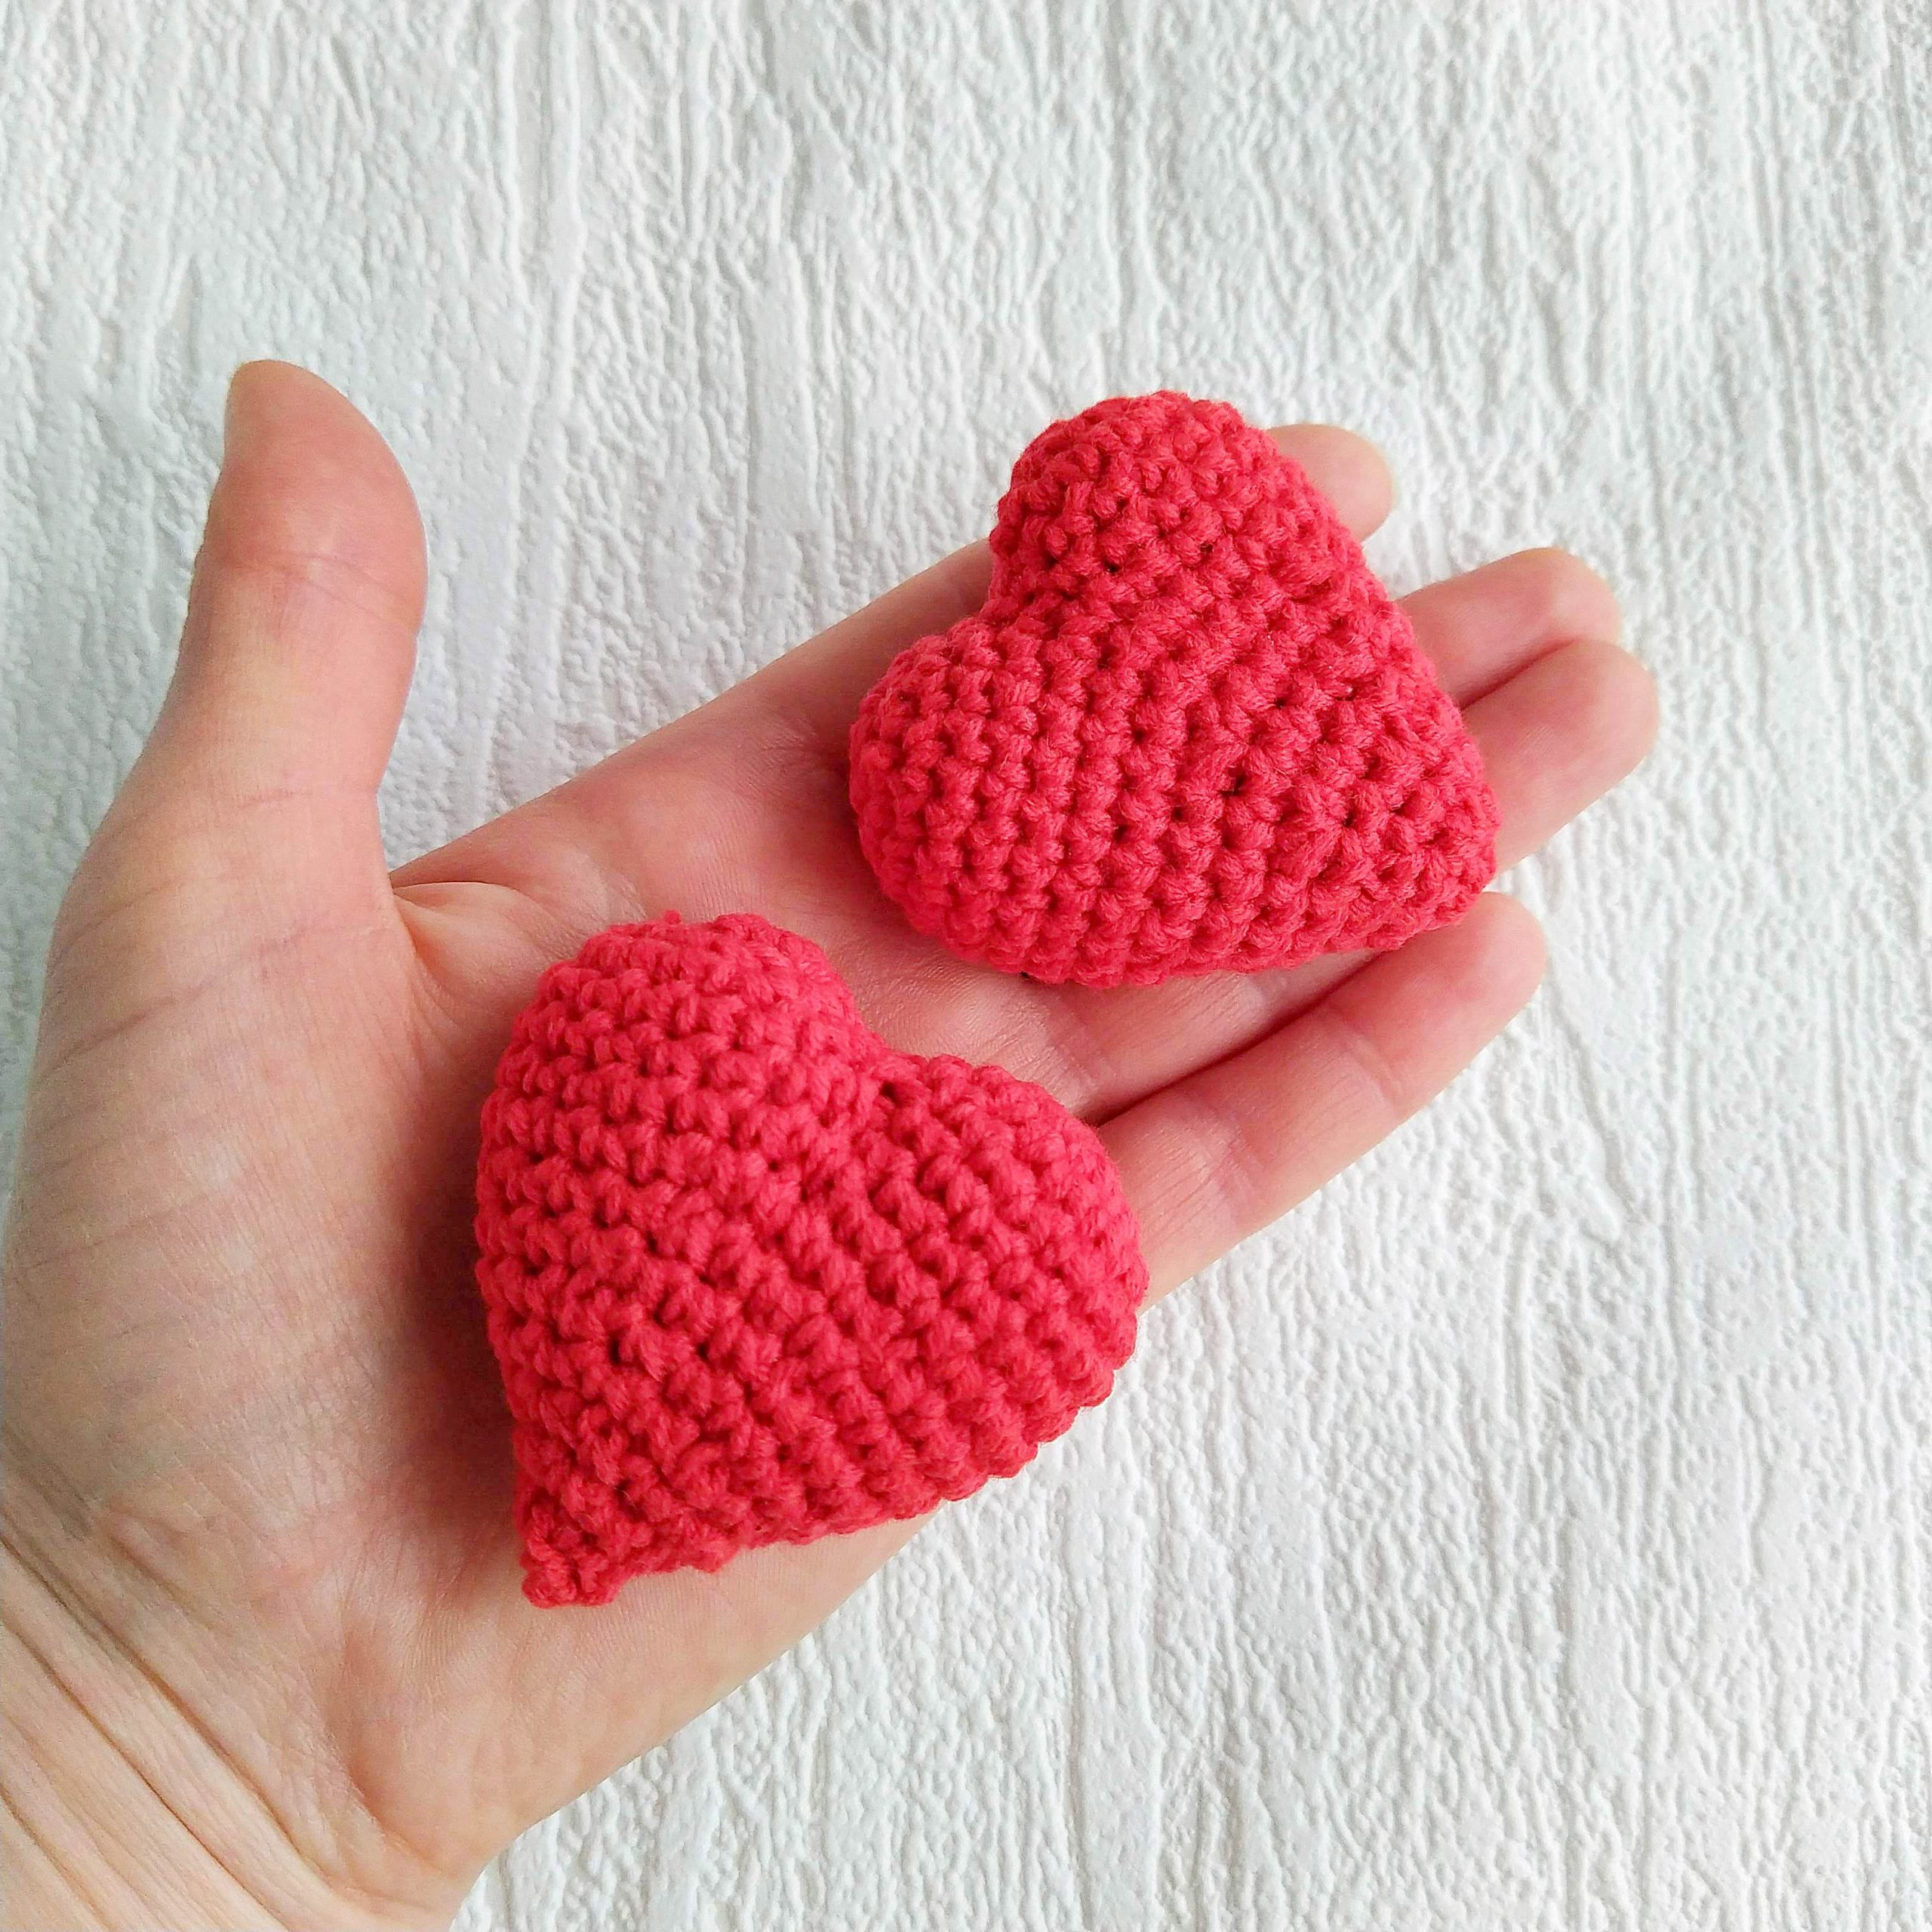 How to Make A Chunky Crochet Heart Wreath 